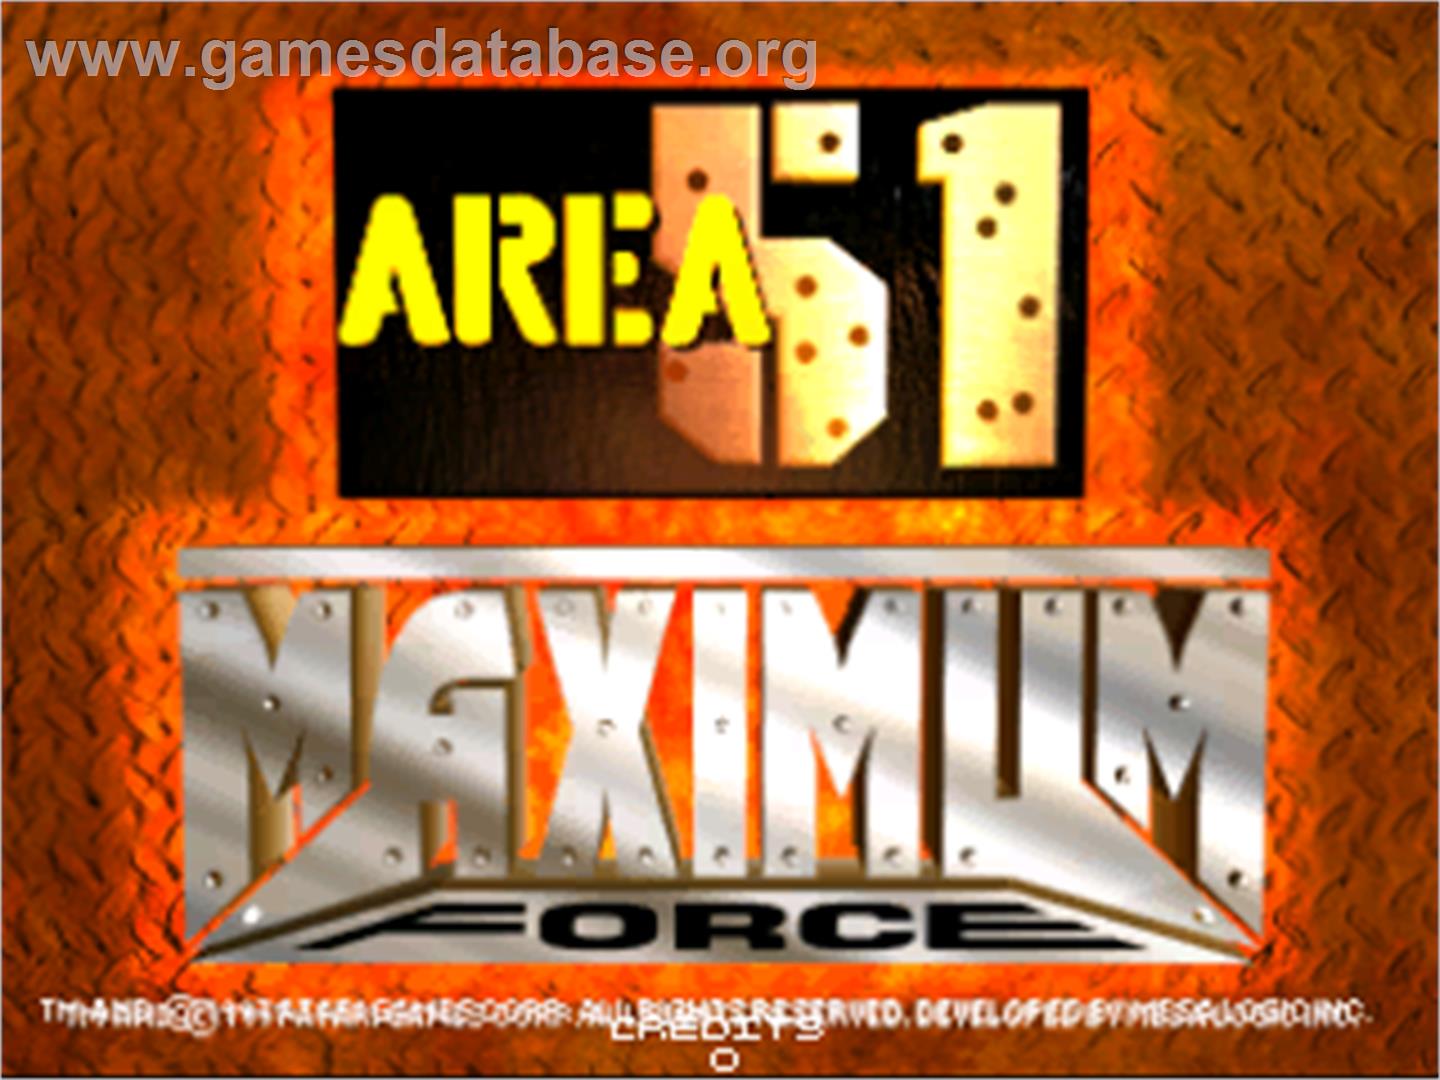 Area 51 / Maximum Force Duo v2.0 - Arcade - Artwork - Title Screen